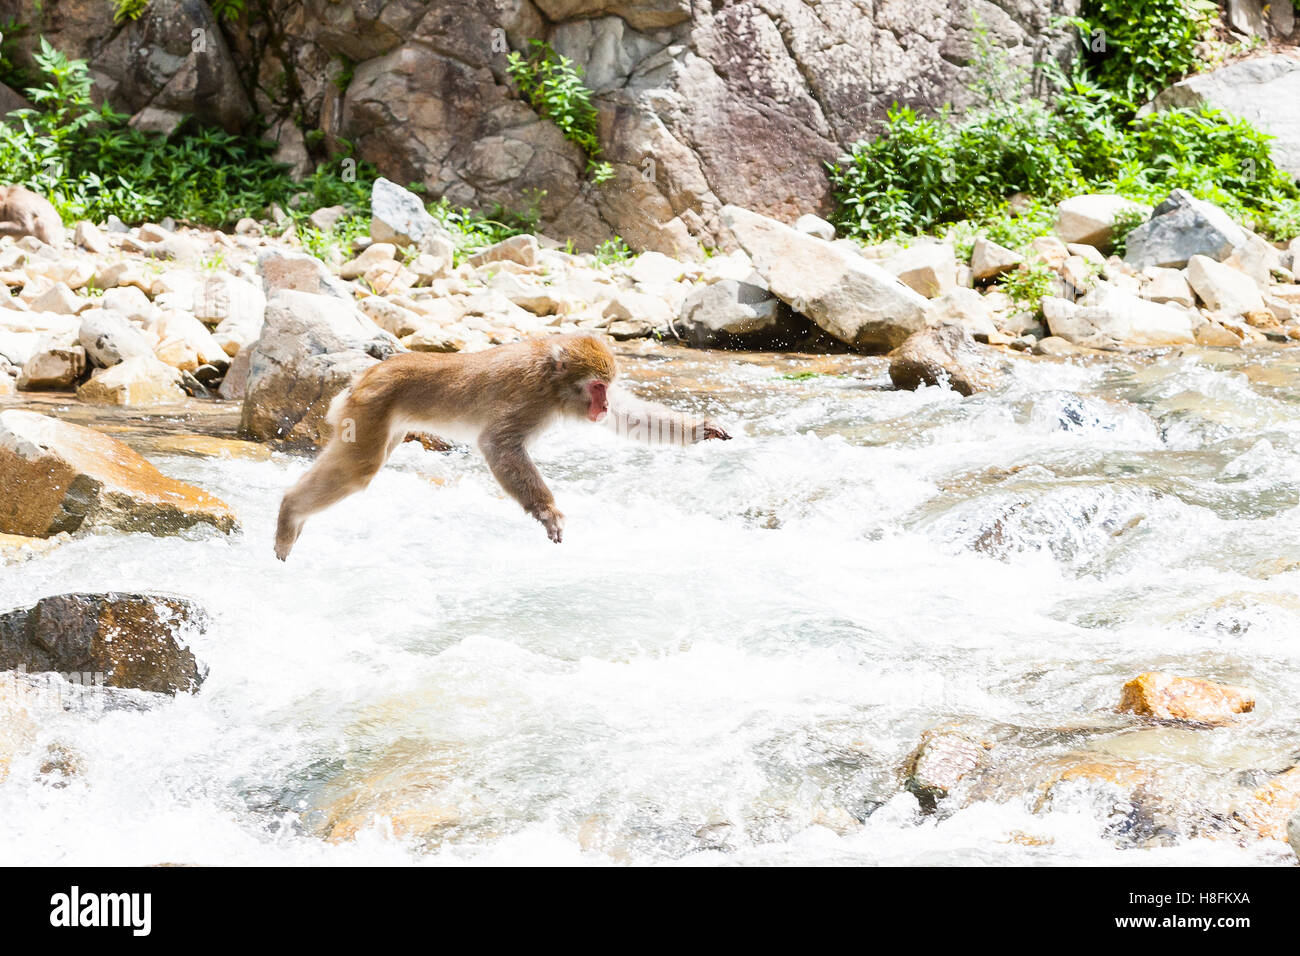 Jigokudani Monkey Park, Yudanaka, Japan. An adult Japanese macaque (Macaca fuscata) leaps across a river. Stock Photo